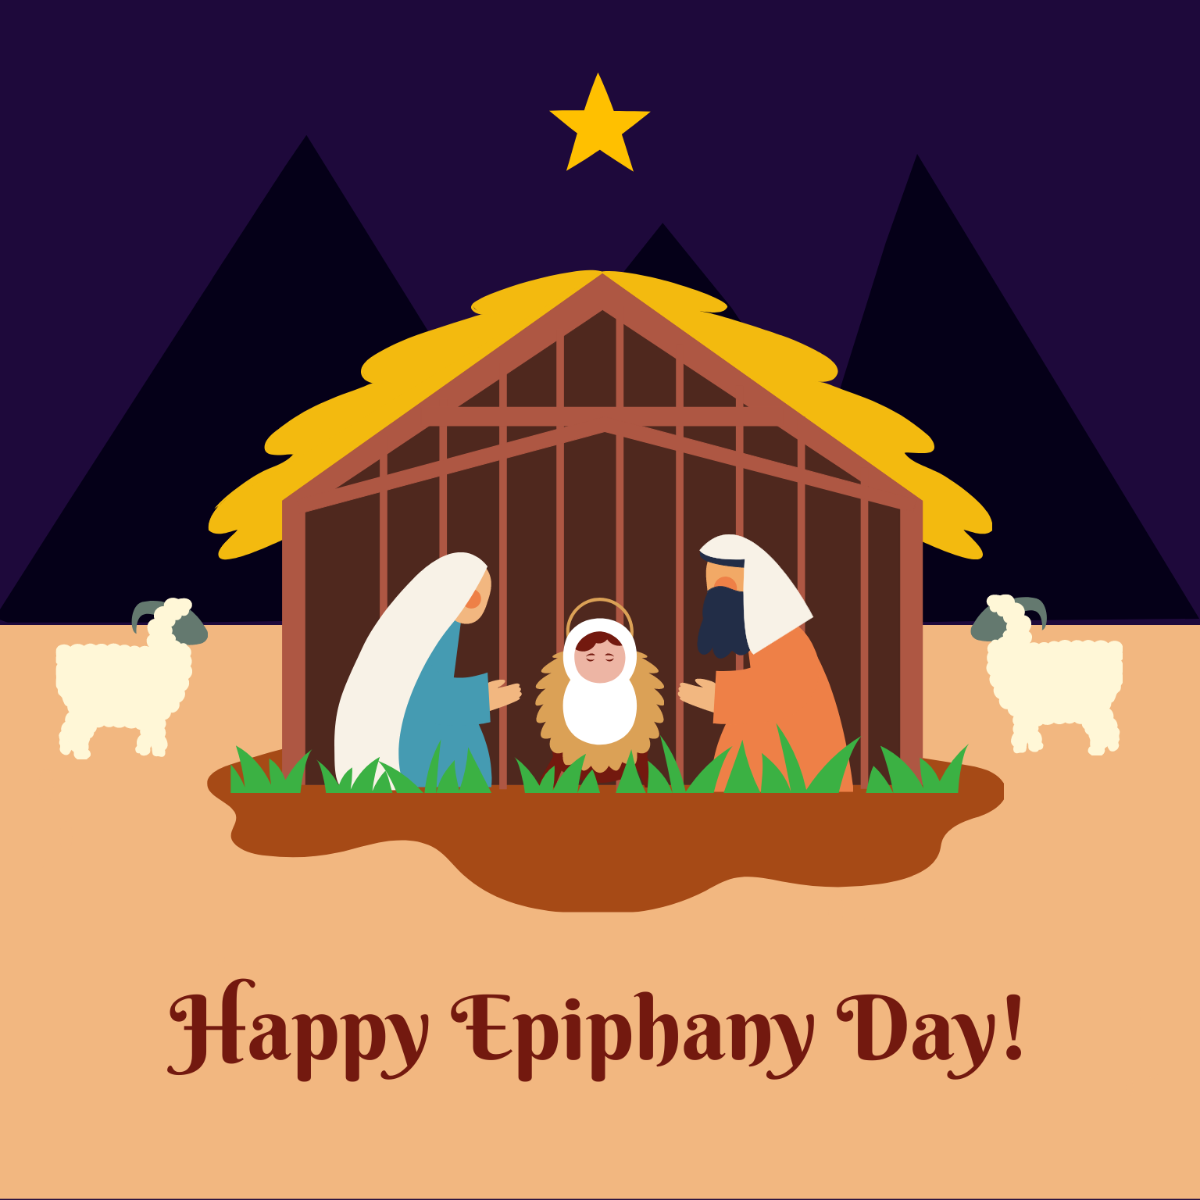 Happy Epiphany Day Illustration Template